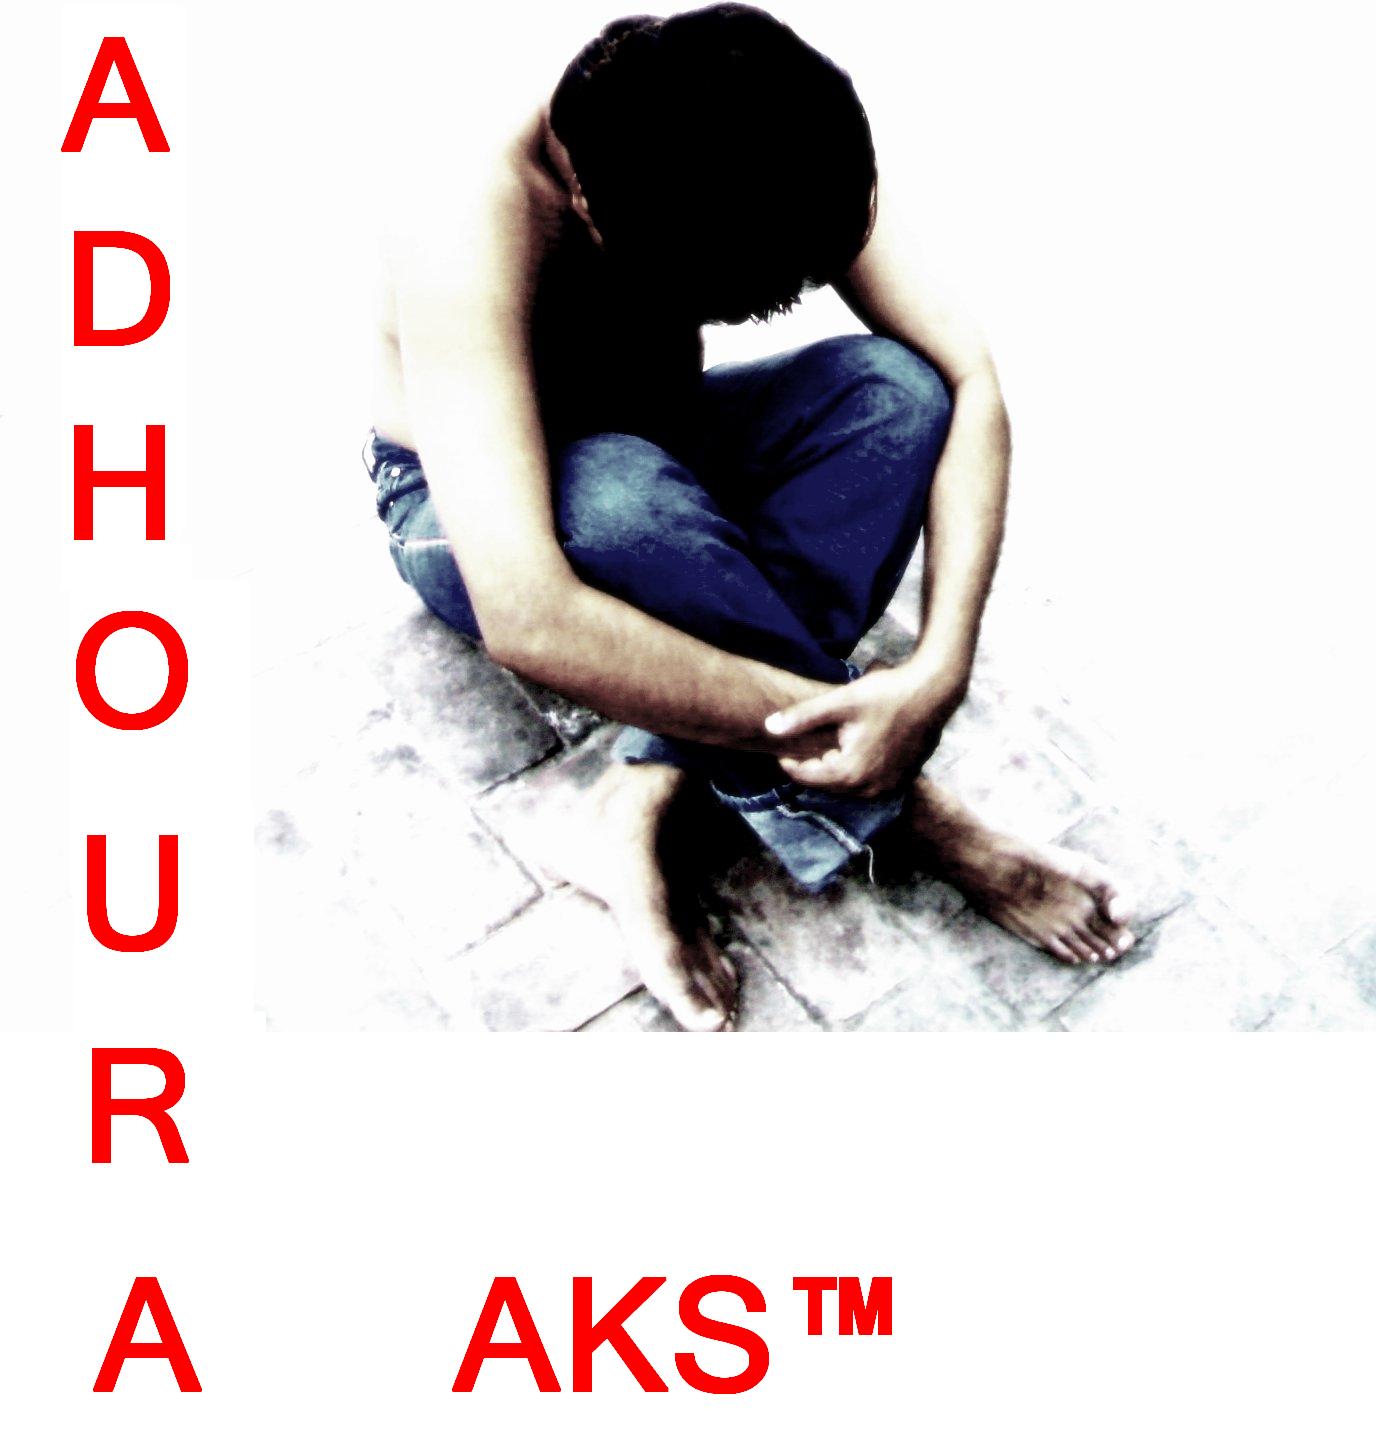 [Adhoura+aks.JPG]